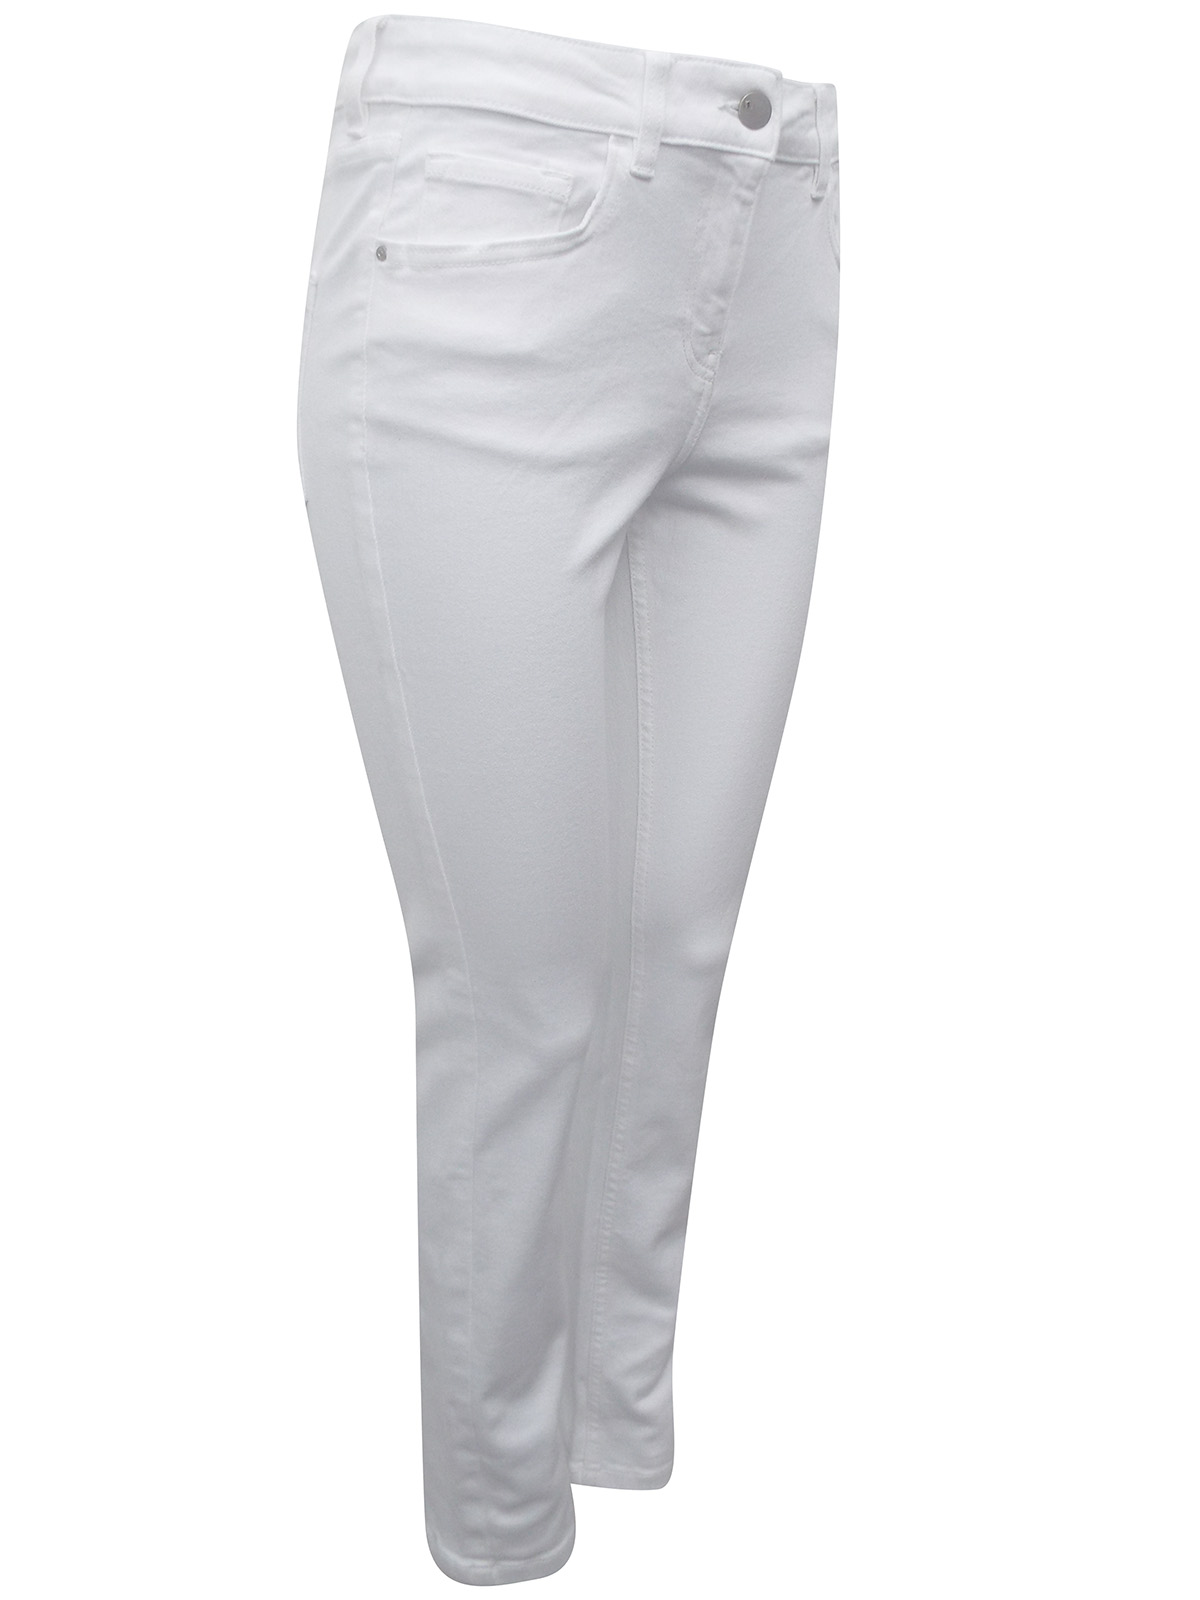 WHITE Mid Rise Slim Fit Cotton Rich Jeans - Size 8 to 26 (Leg 29